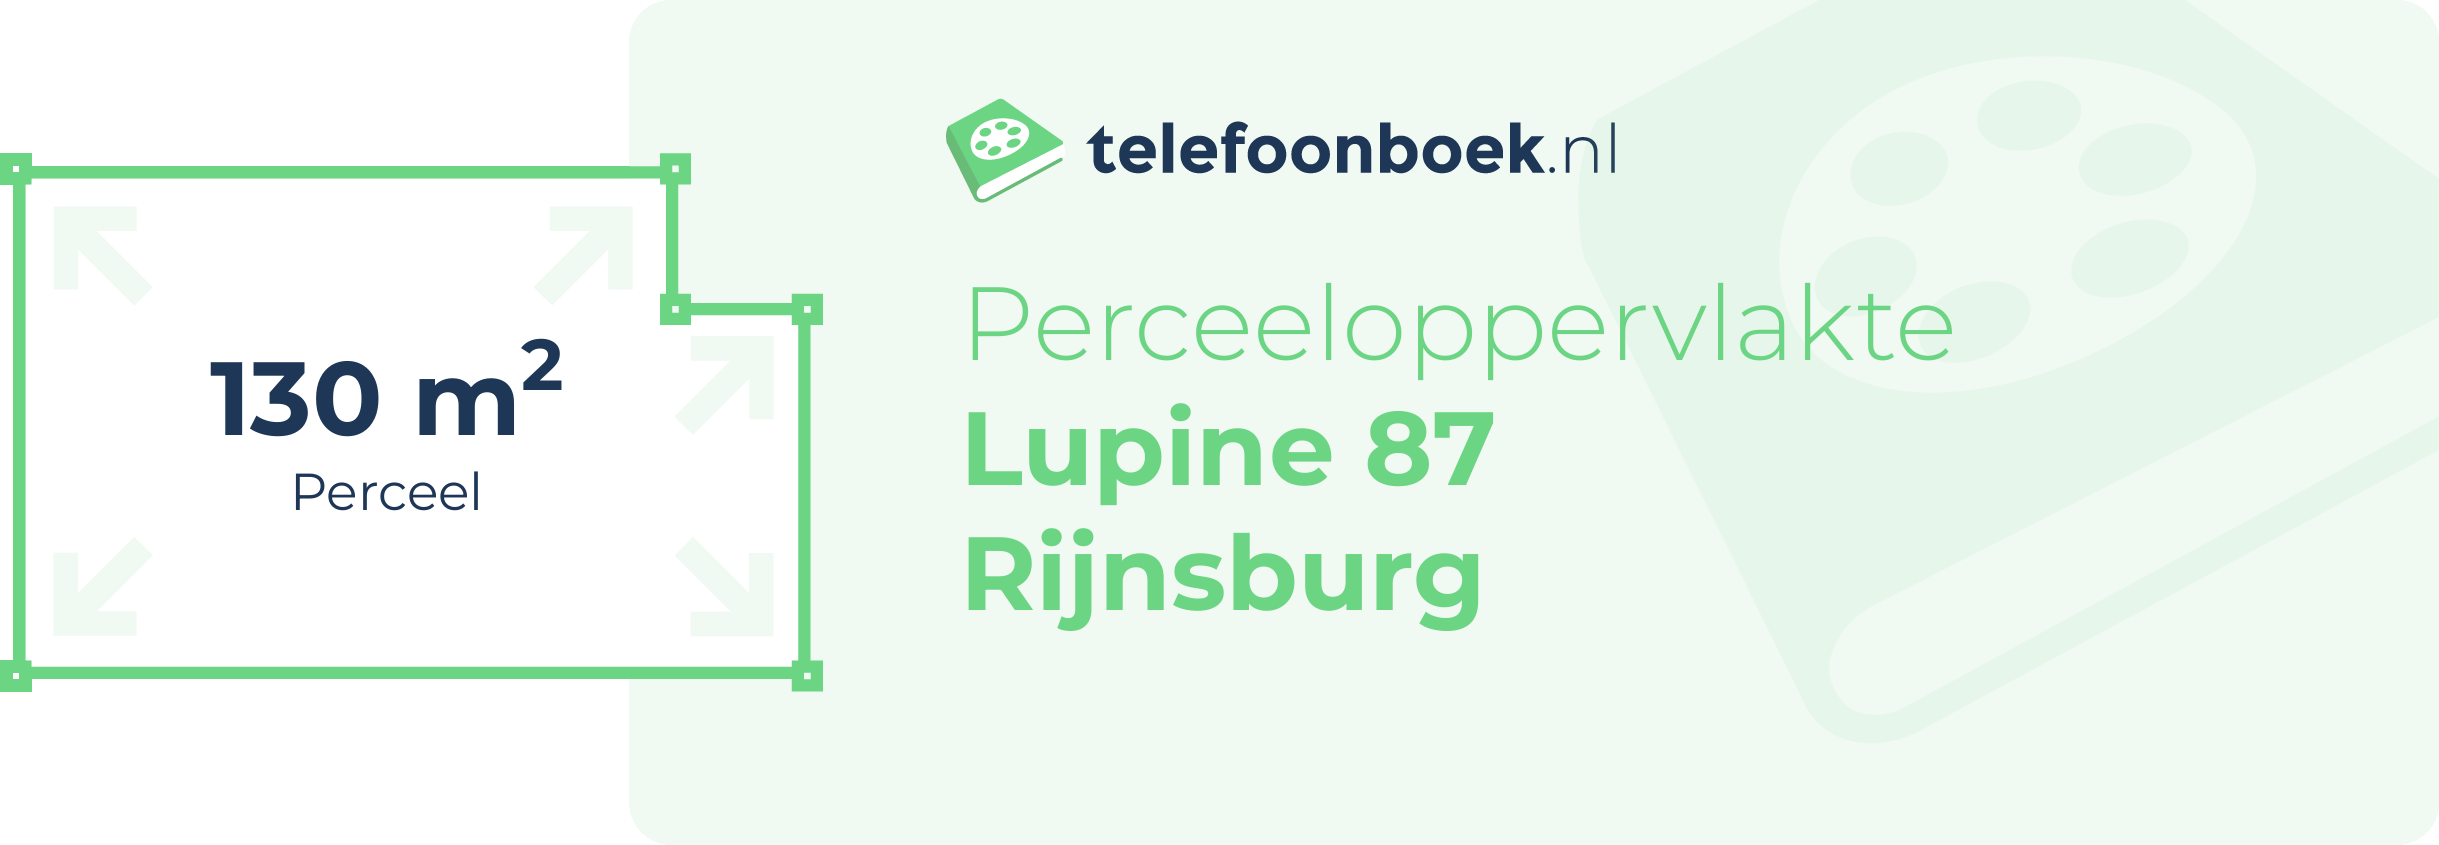 Perceeloppervlakte Lupine 87 Rijnsburg